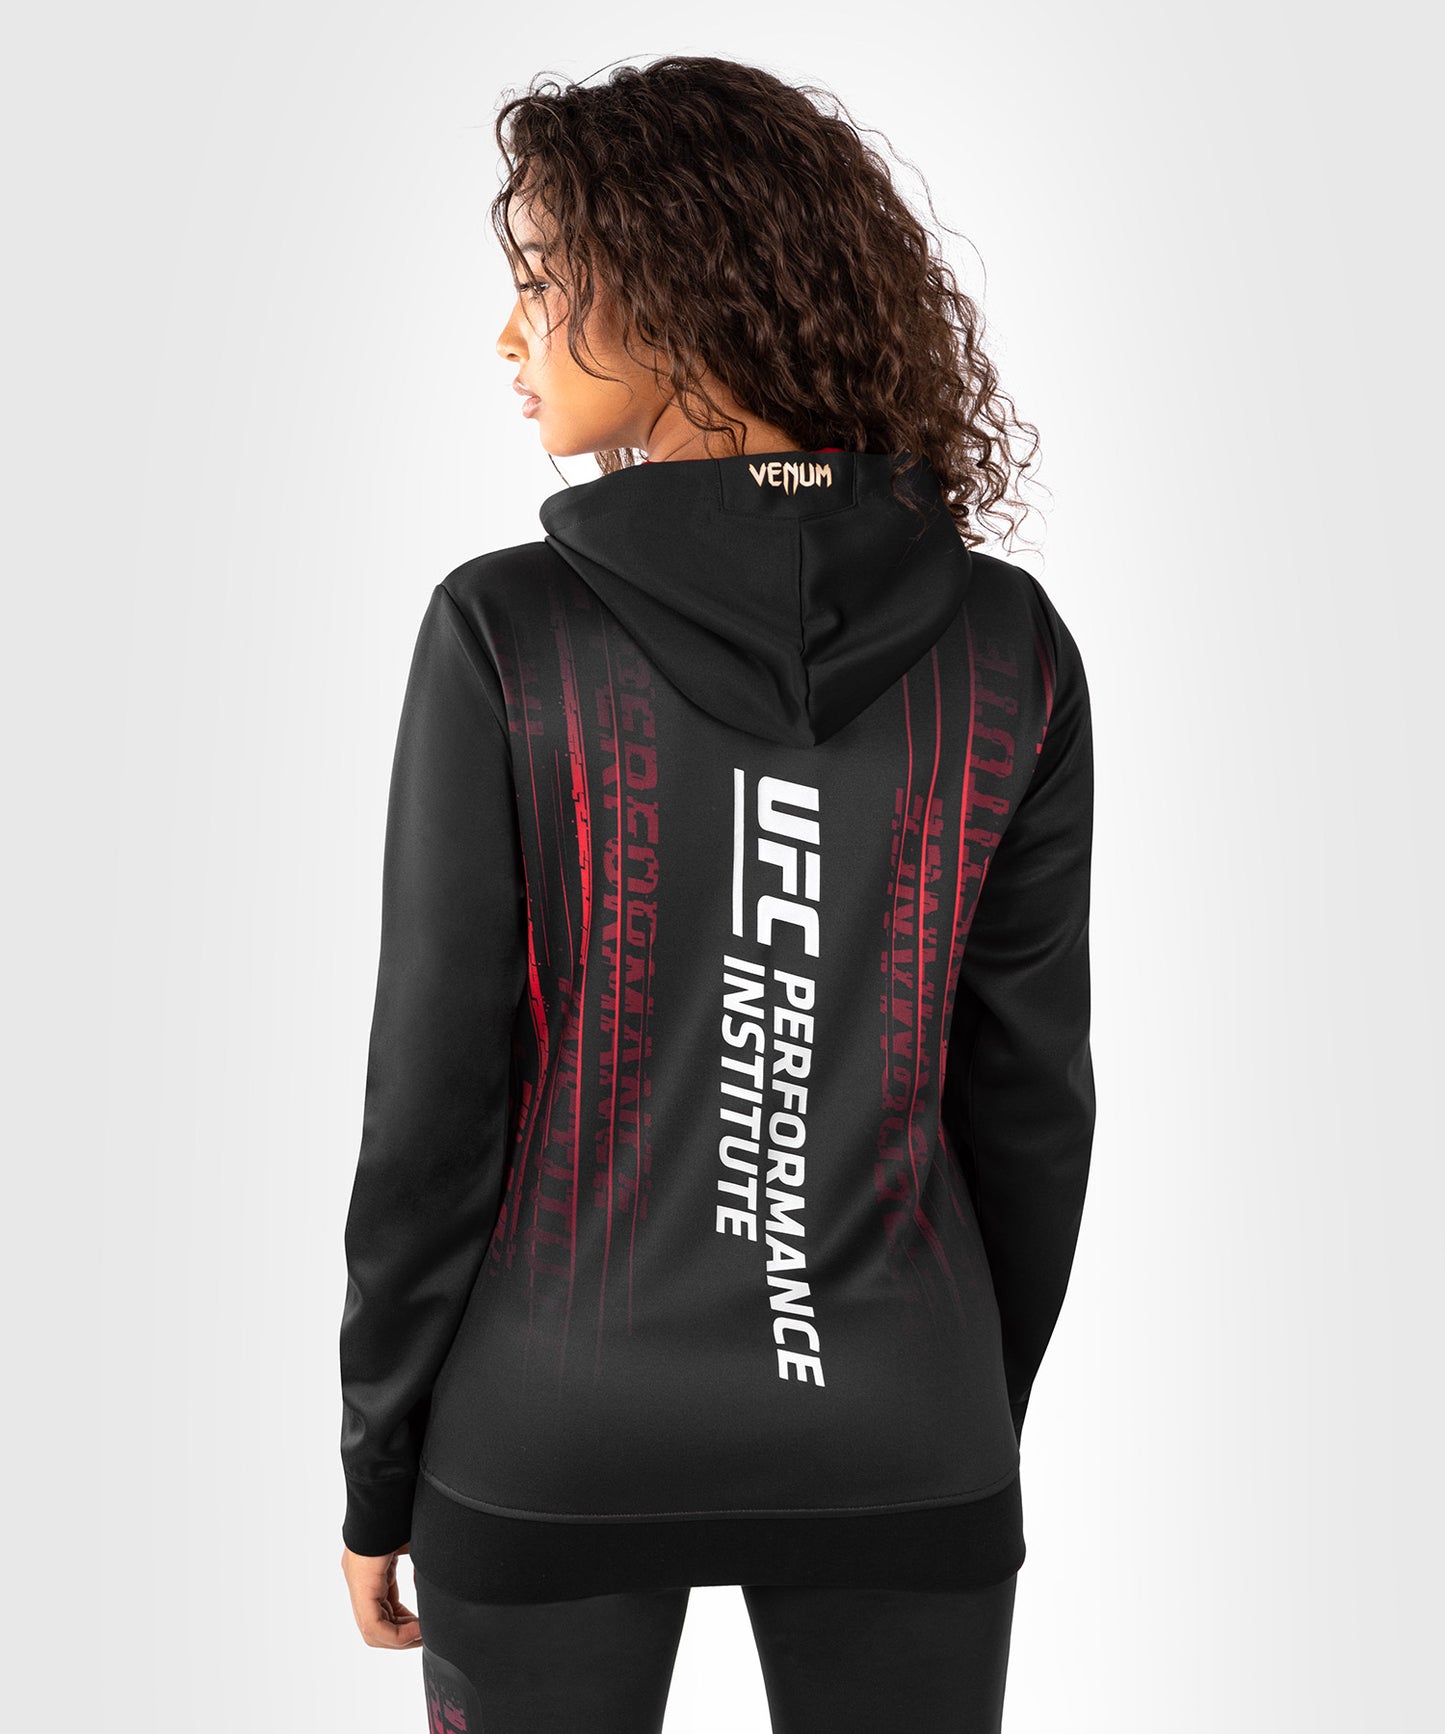 UFC Venum Performance Institute 2.0 Women’s Zip Hoodie - Black/Red